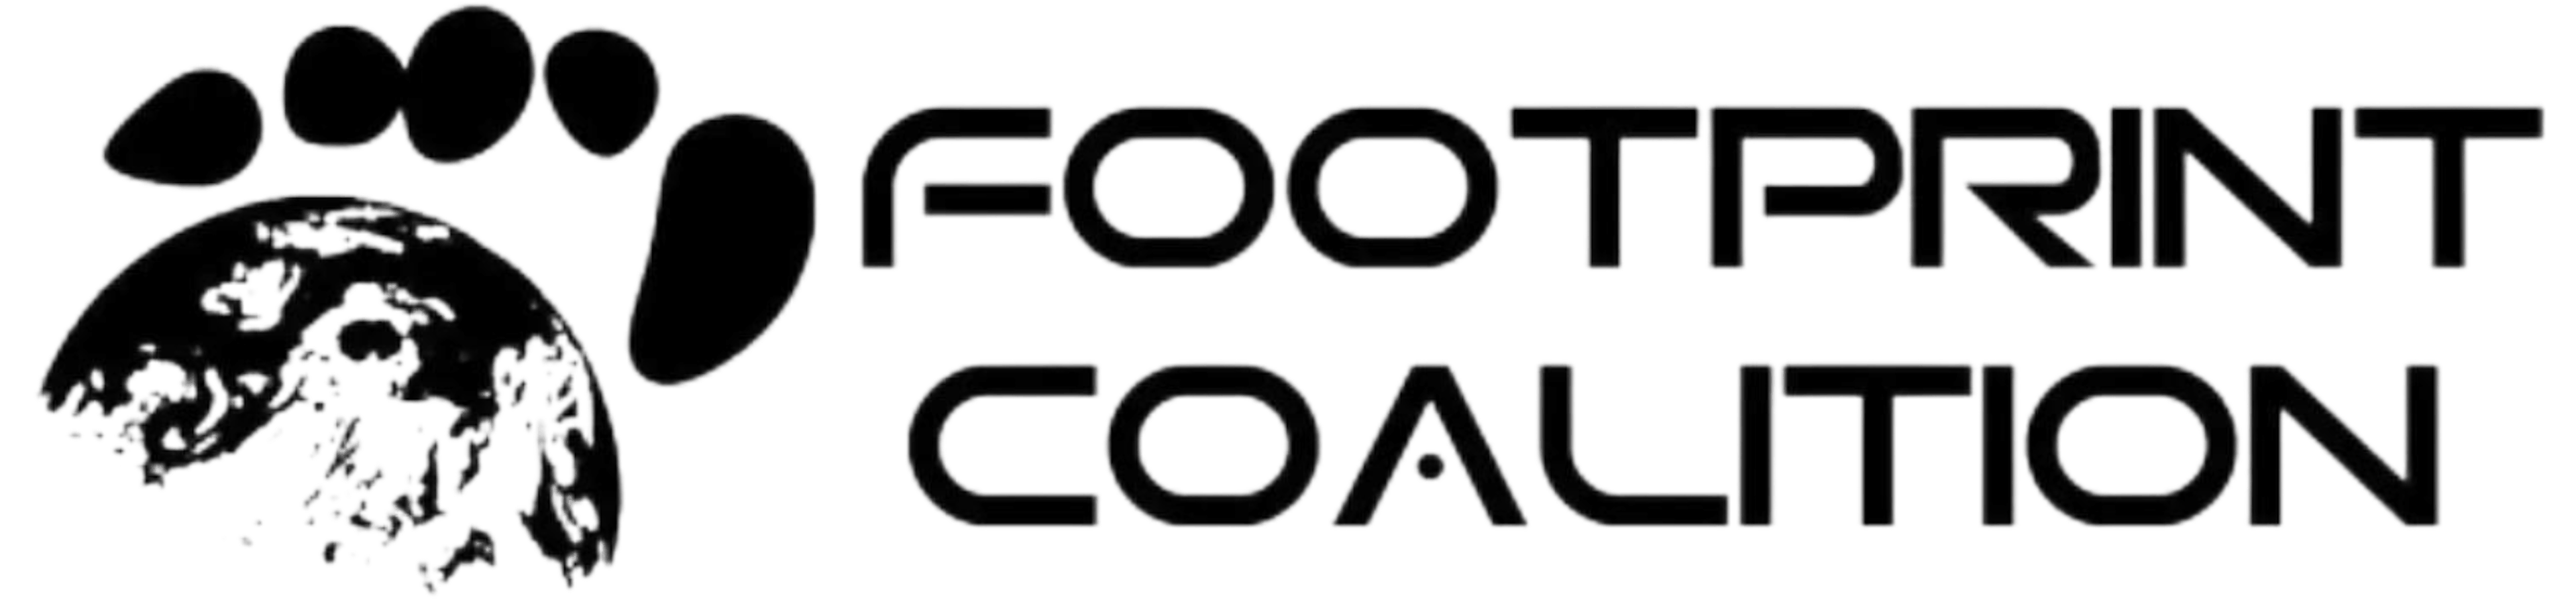 footprint coalition logo